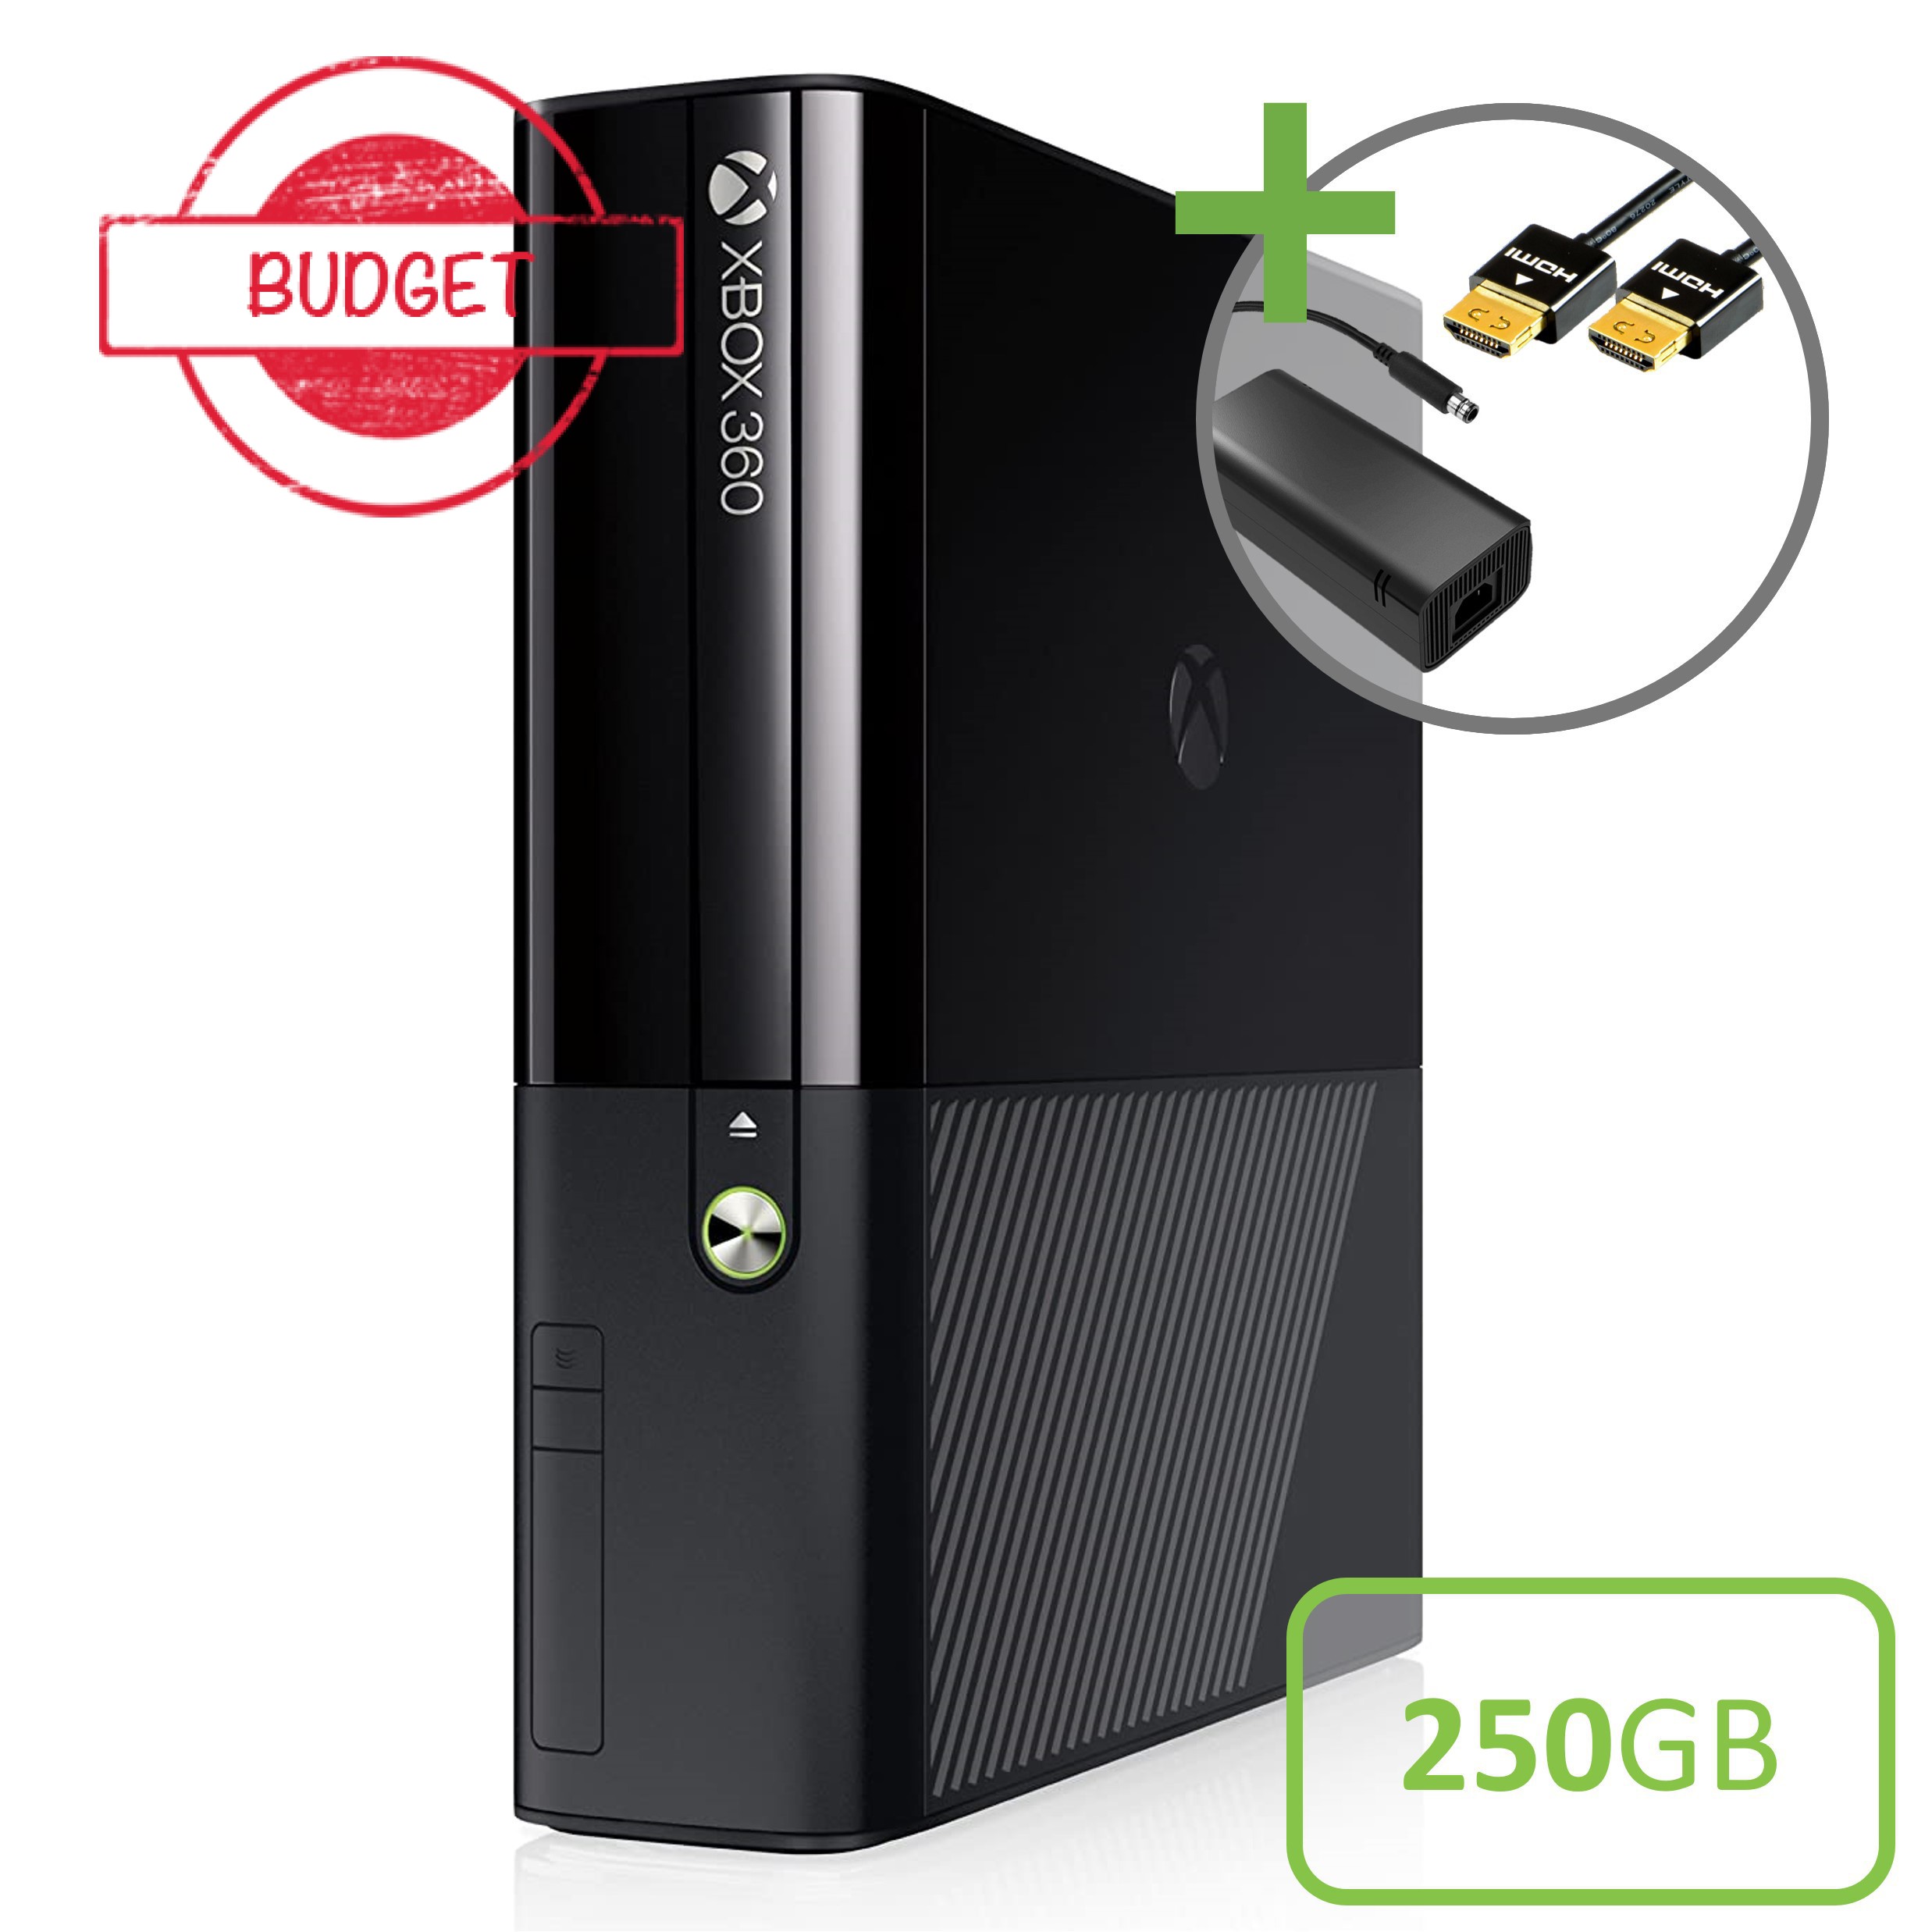 Microsoft Xbox 360 New Slim Console (250GB) - Budget - Xbox 360 Hardware